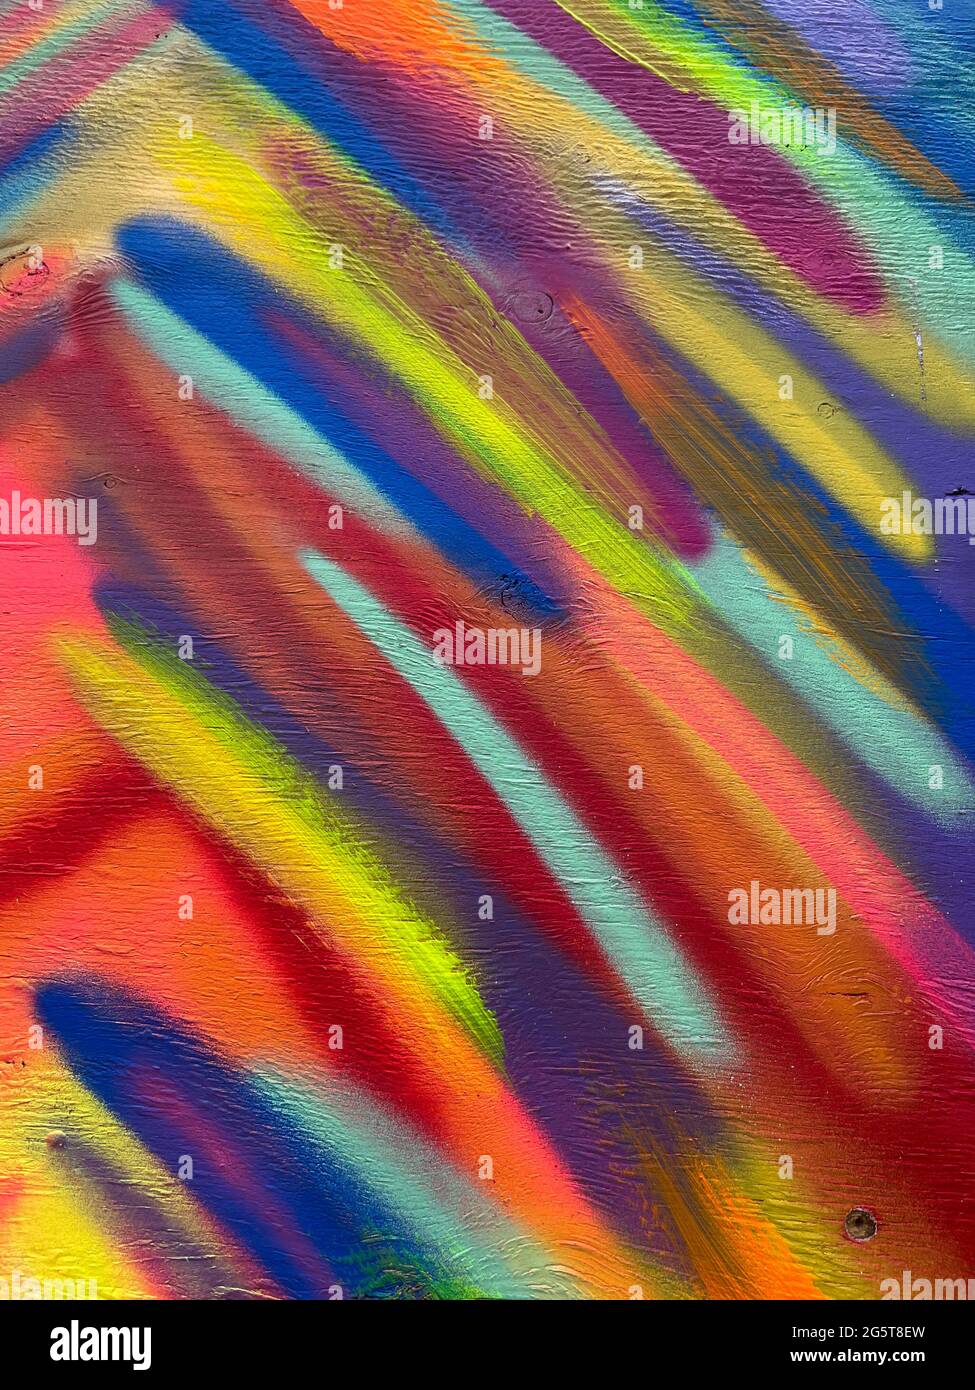 Color streaks abstract design art artwork Stock Photo